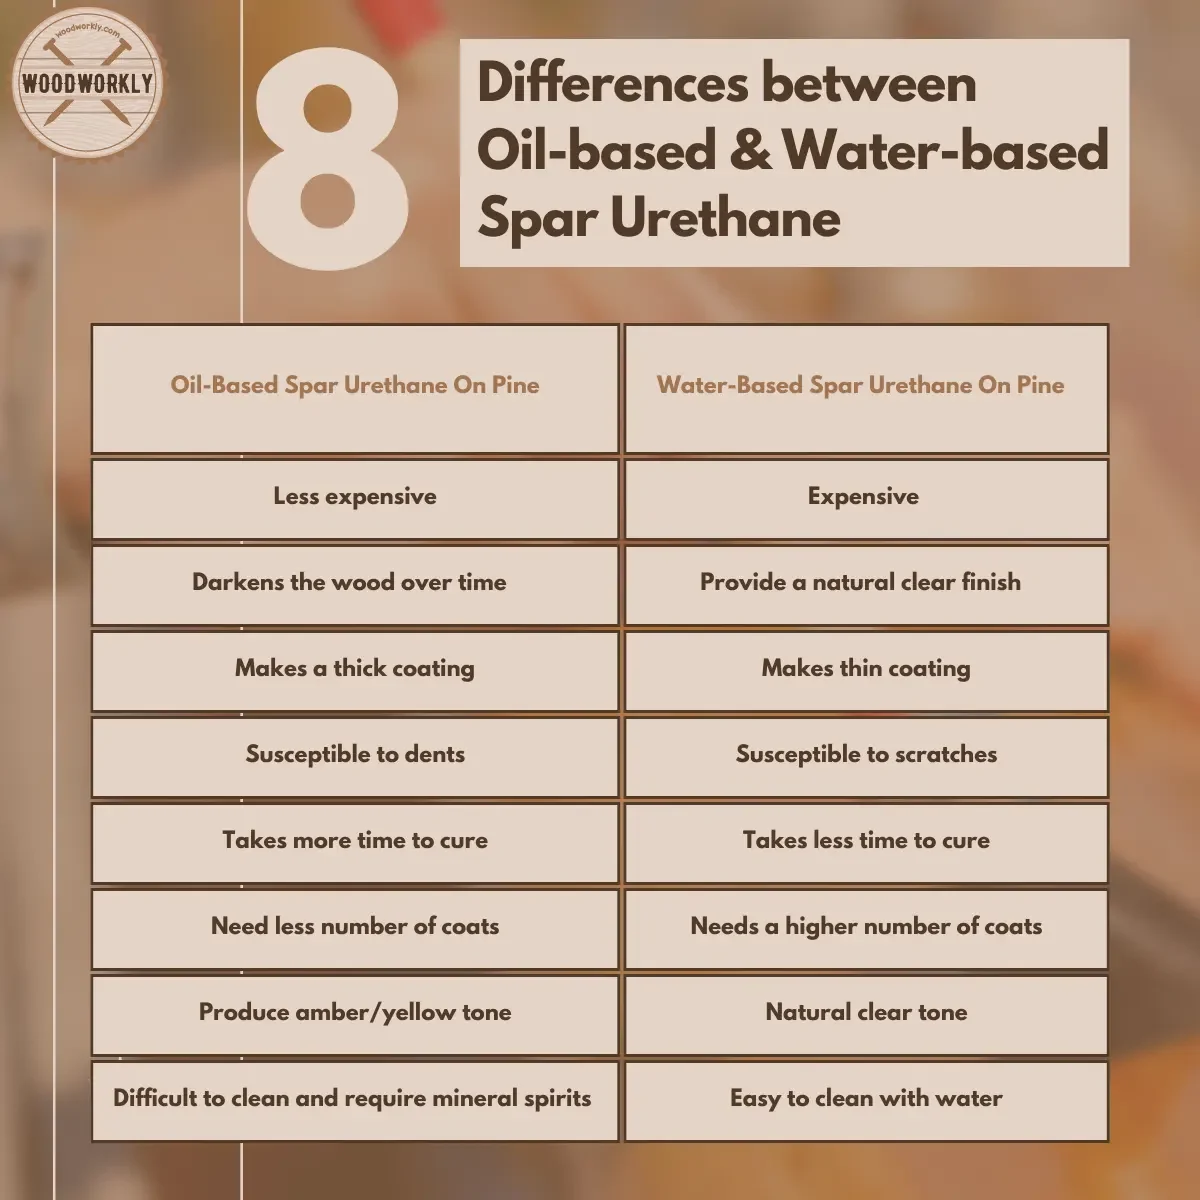 Differences between Oil-based & Water-based Spar Urethane